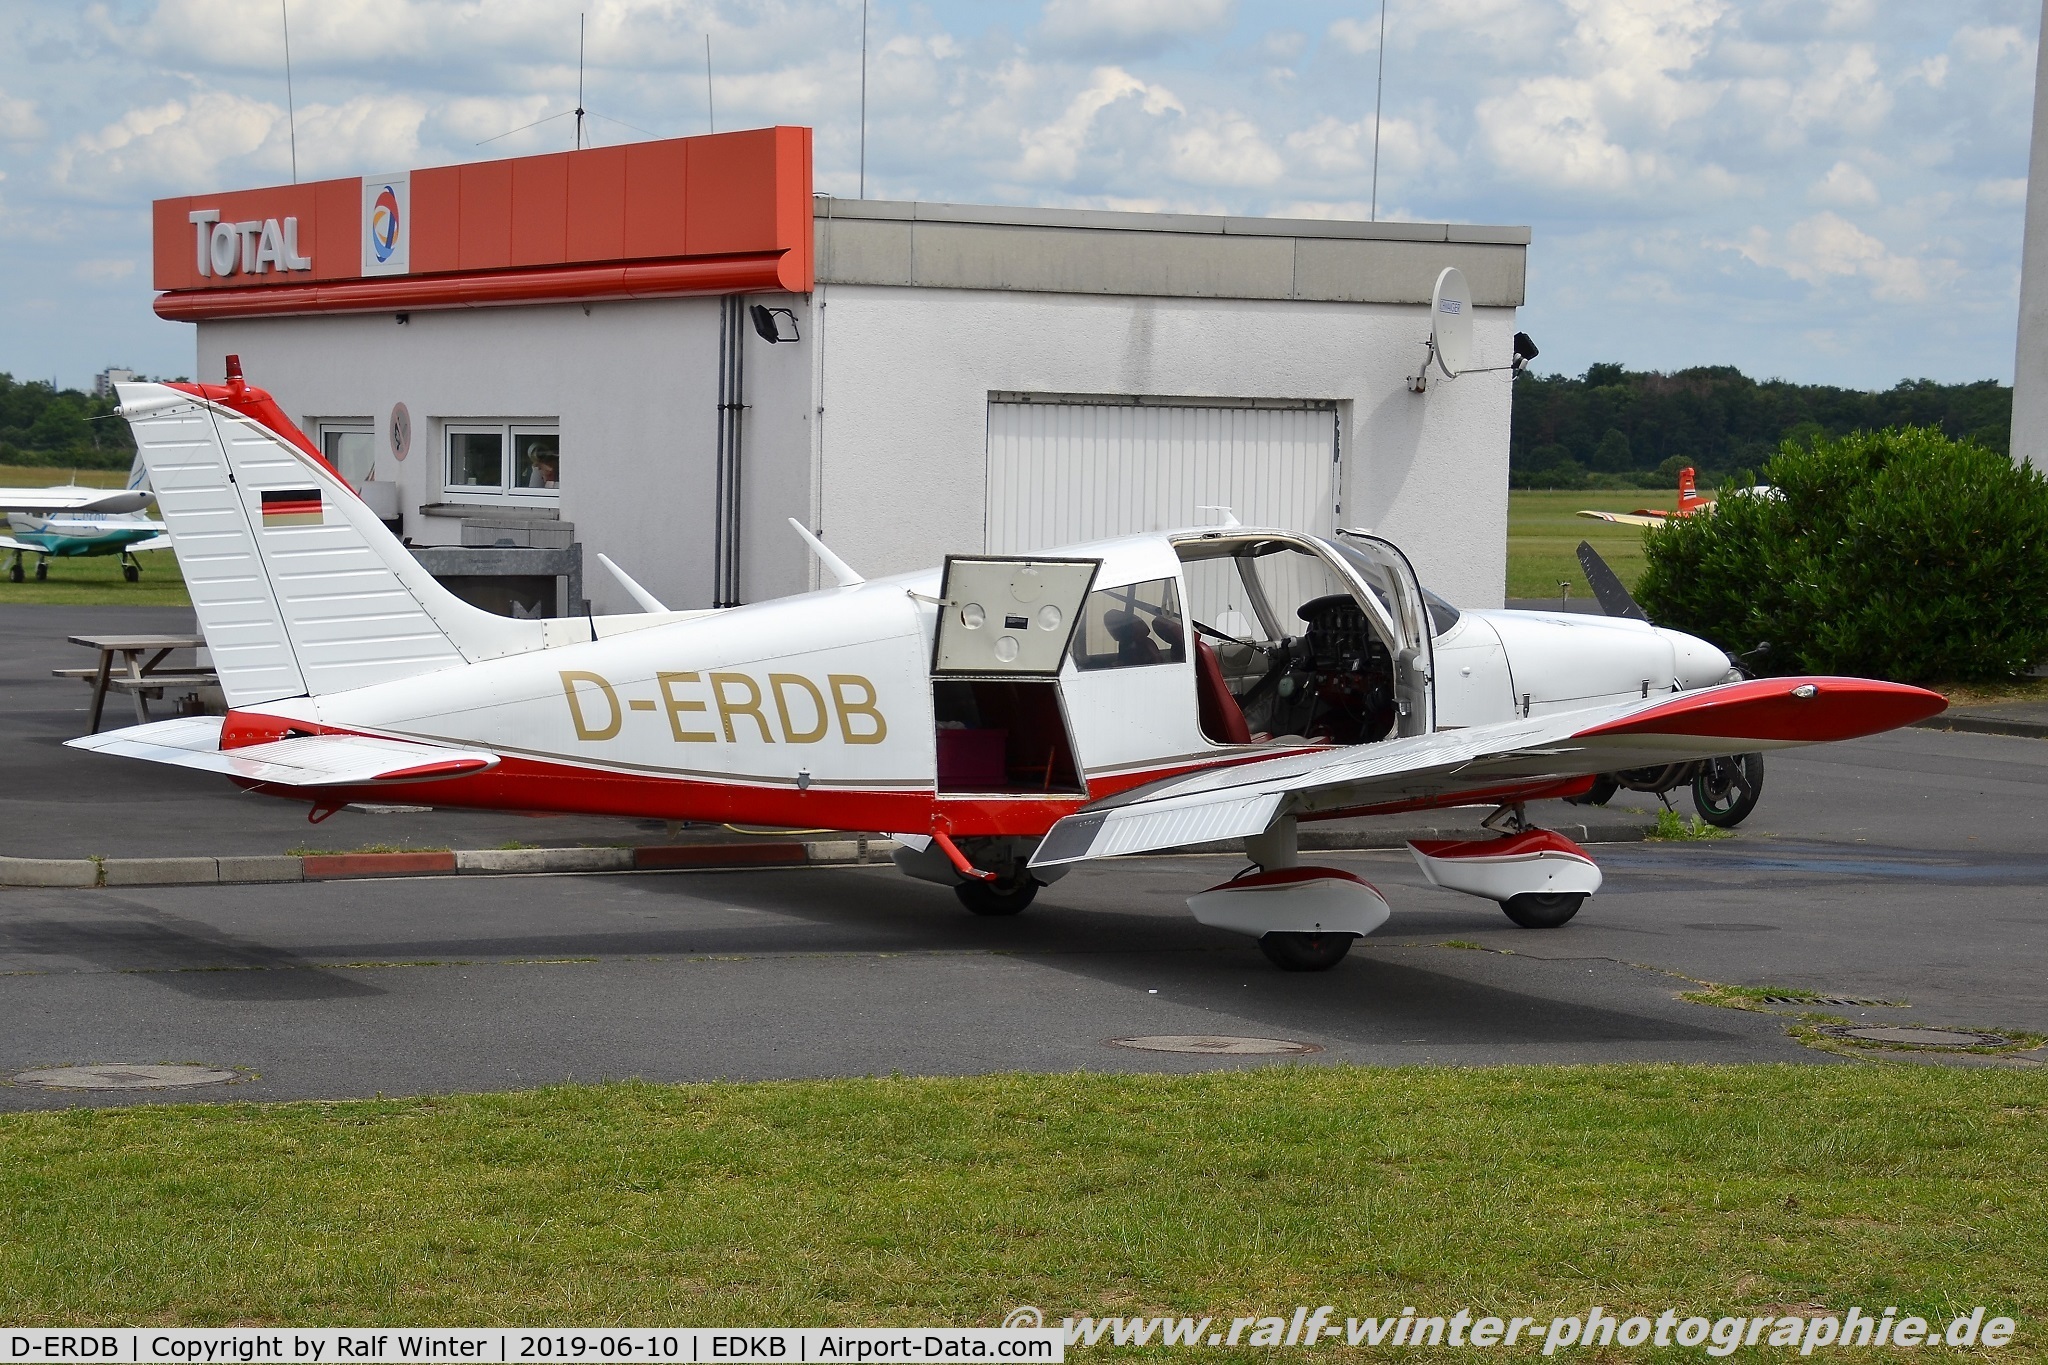 D-ERDB, 1973 Piper PA-28-180 Challenger C/N 28-7305284, Piper PA-28-180 Cherokee Challenger - Private - 28-7305284 - D-ERDB - 10.06.2019 - EDKB